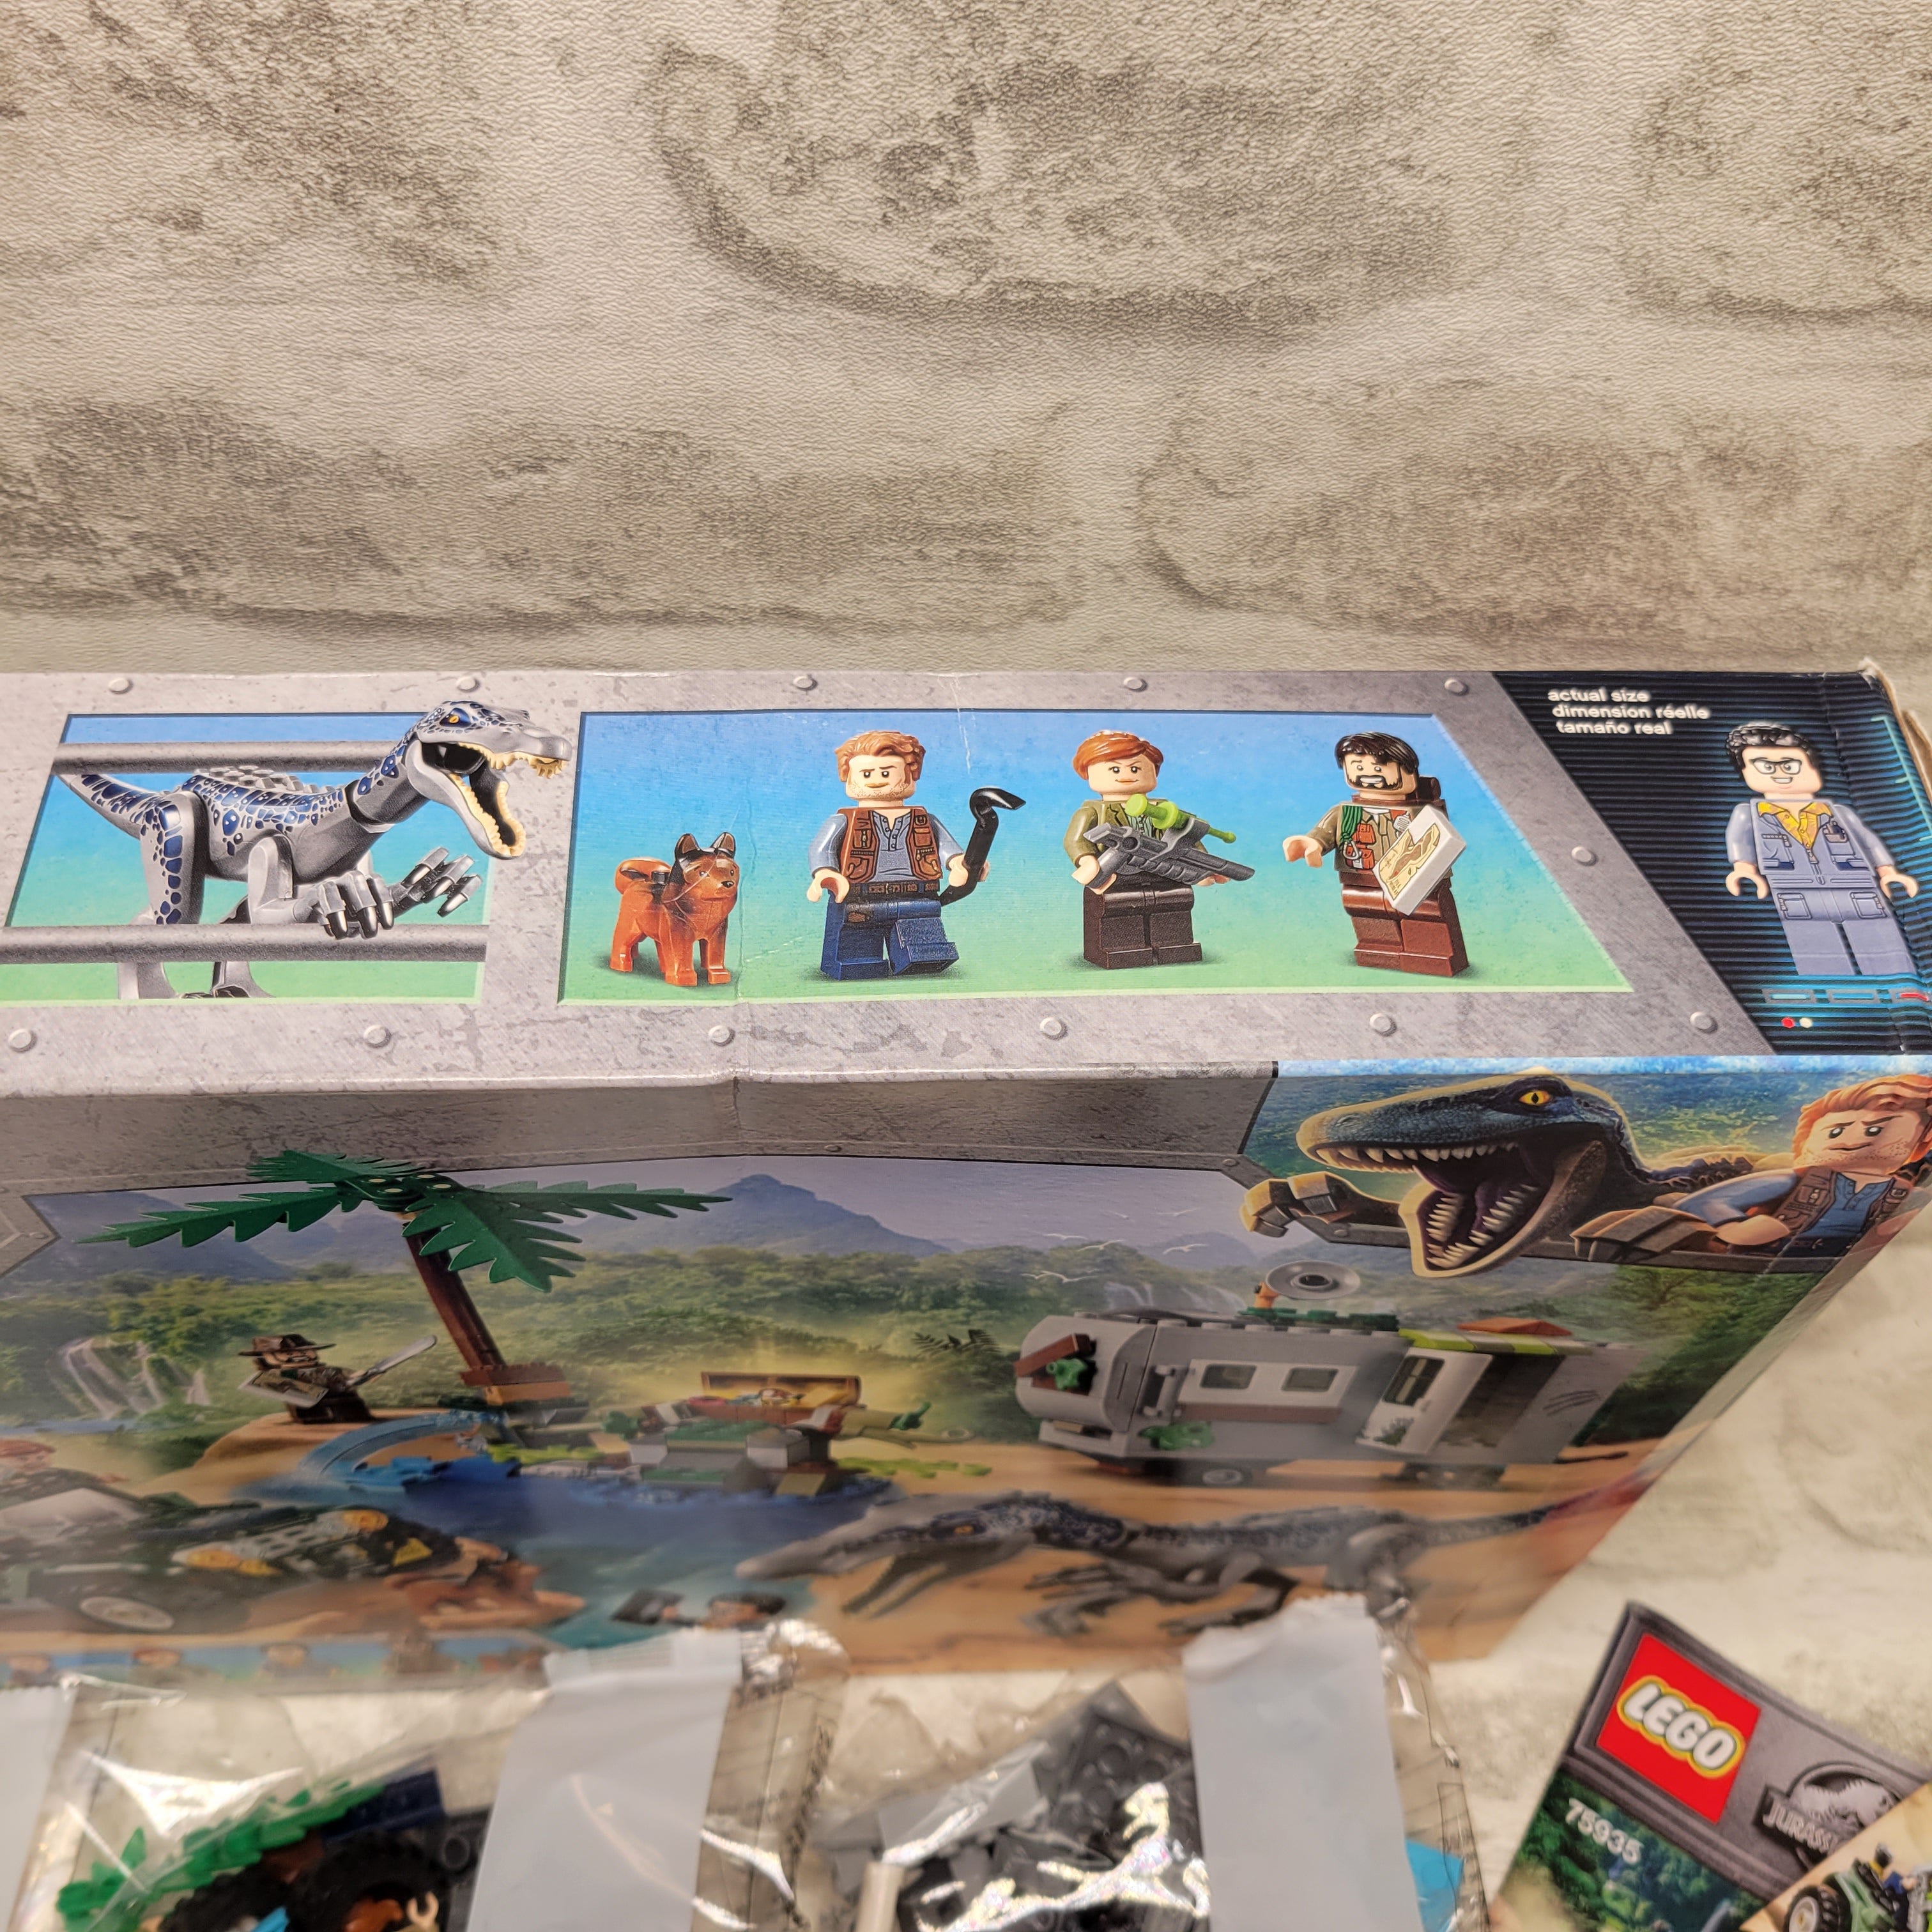 LEGO Jurassic World Baryonyx Face Off: The Treasure Hunt 75935 (434 Pieces) (7670836035822)